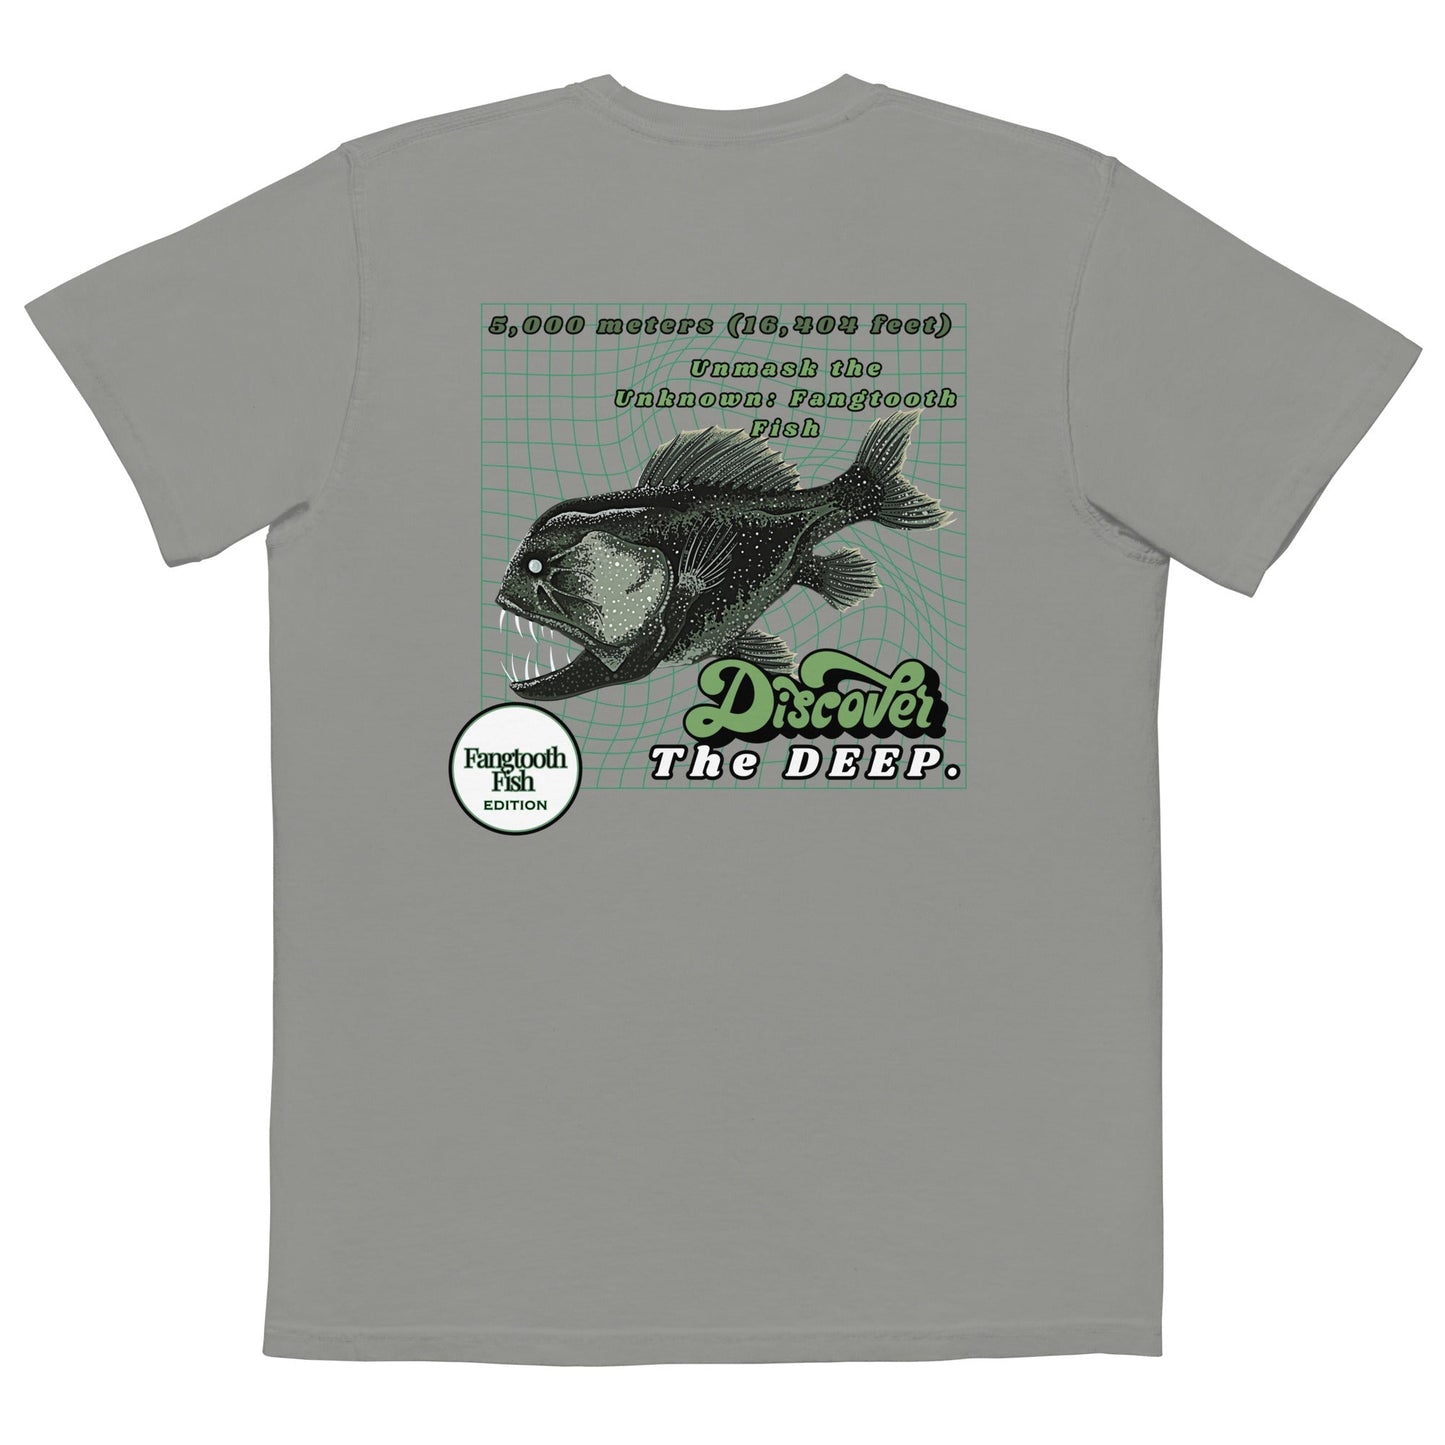 Discover the Deep Anglerfish Pocket T-shirt - Tropical Seas Clothing 